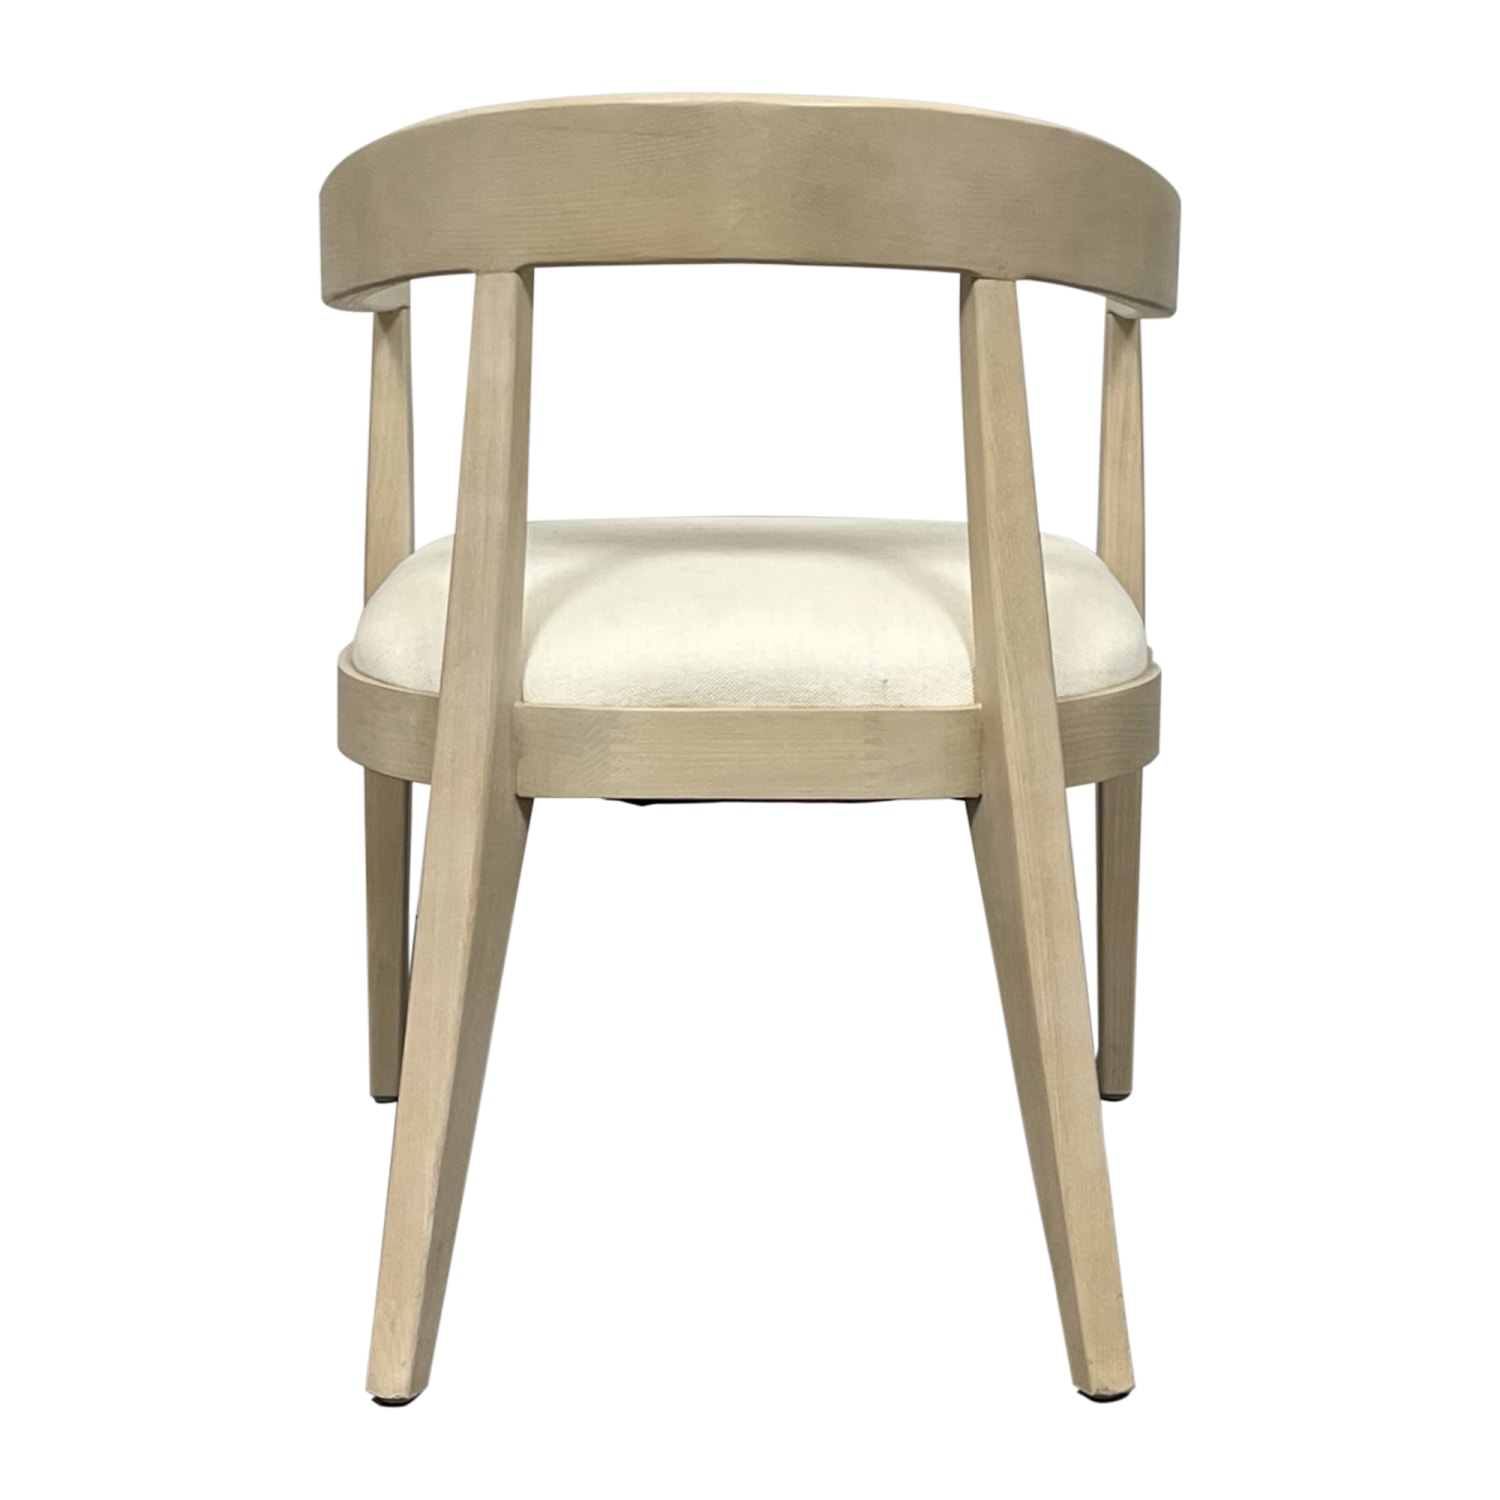 Interior Define Interior Define Monroe Dining Chair dimensions